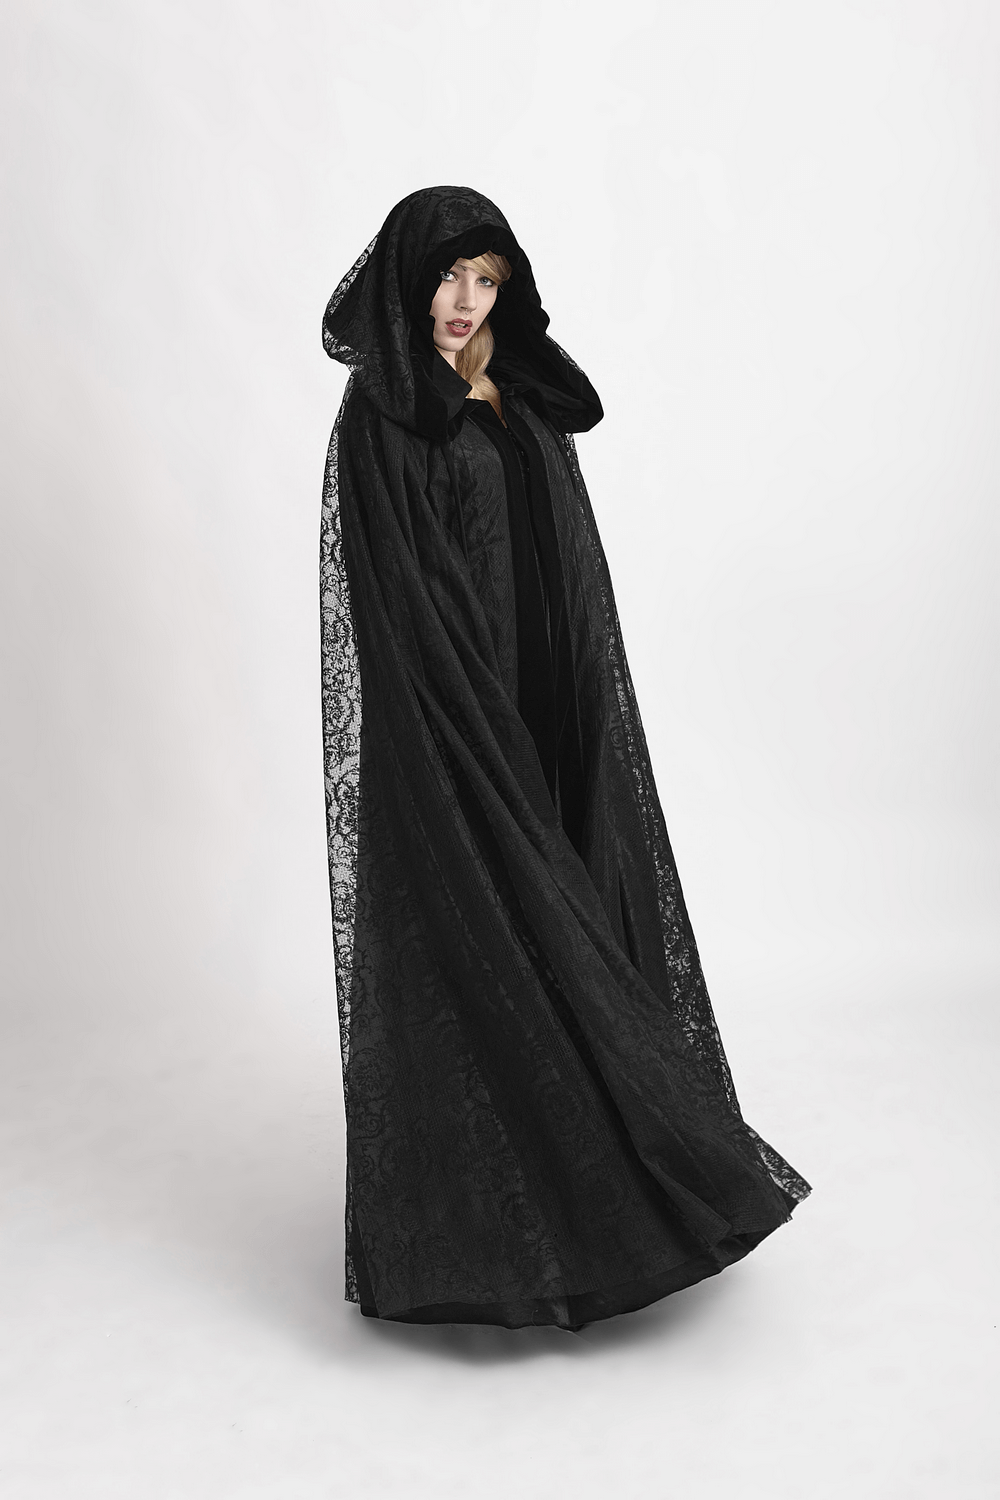 Elegant Black Lace Hooded Cloak for Mystical Style - HARD'N'HEAVY